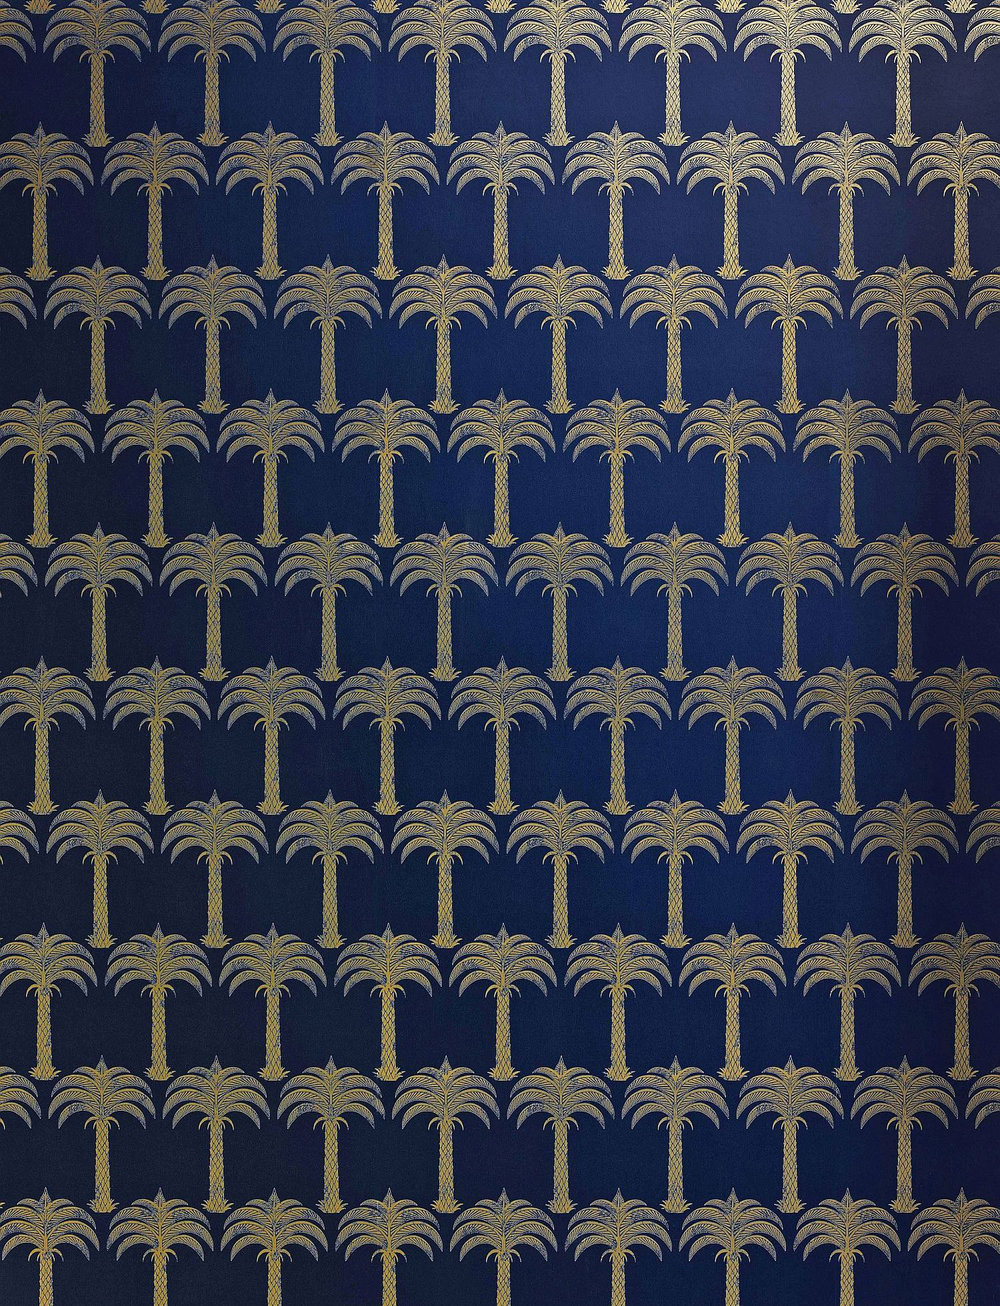 Marrakech Palm Wallpaper - Midnight Blue - by Barneby Gates